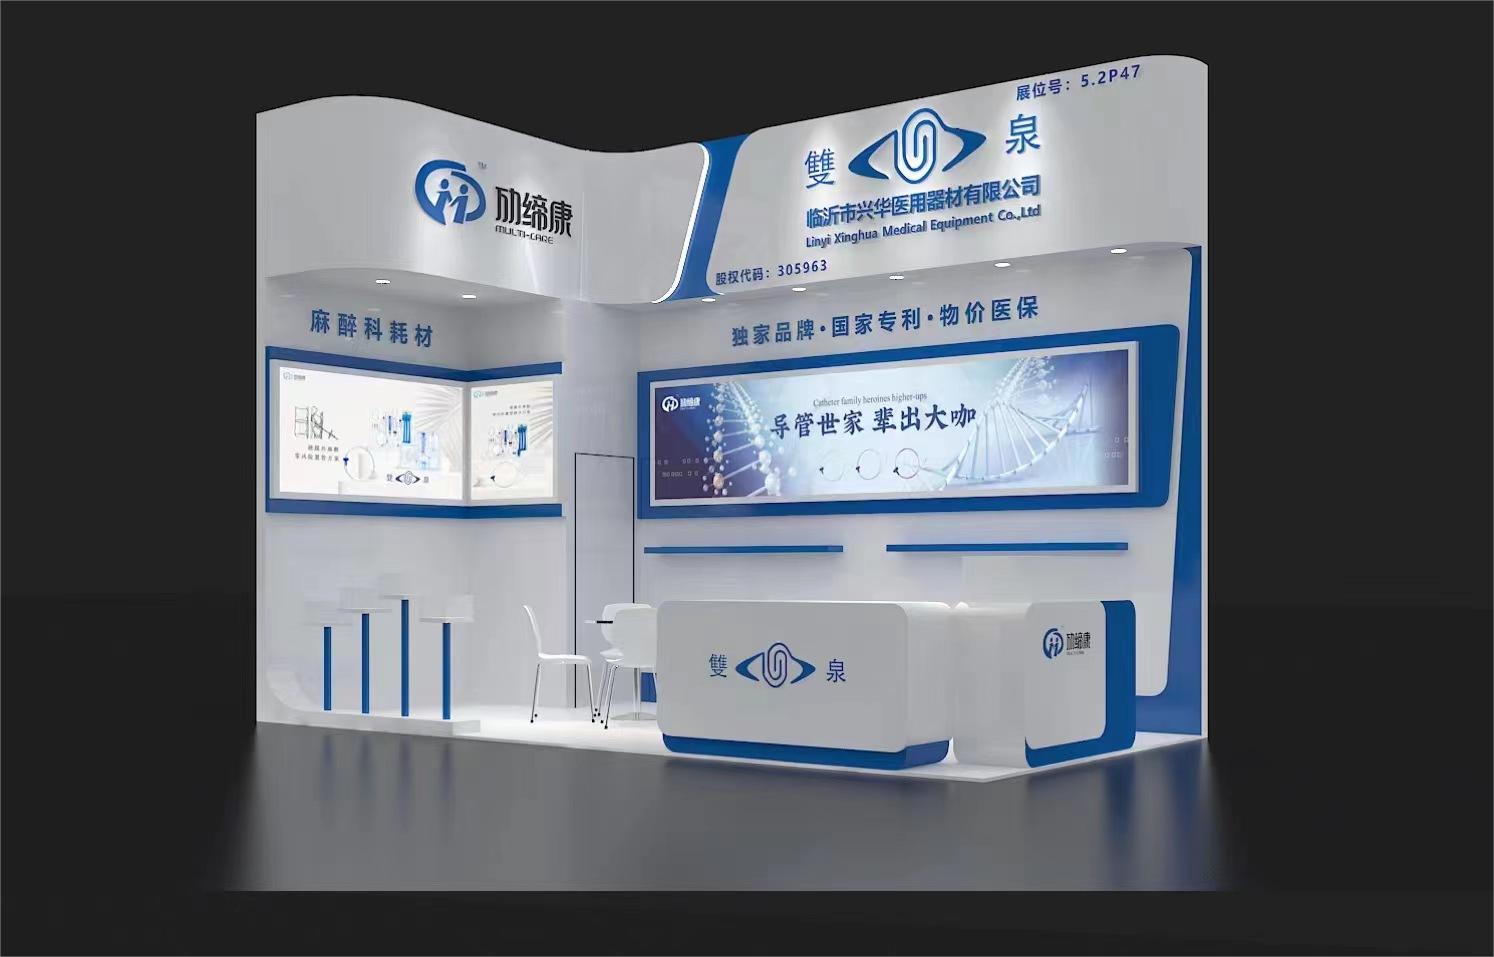 The 87st China International Medical Equipment Fair